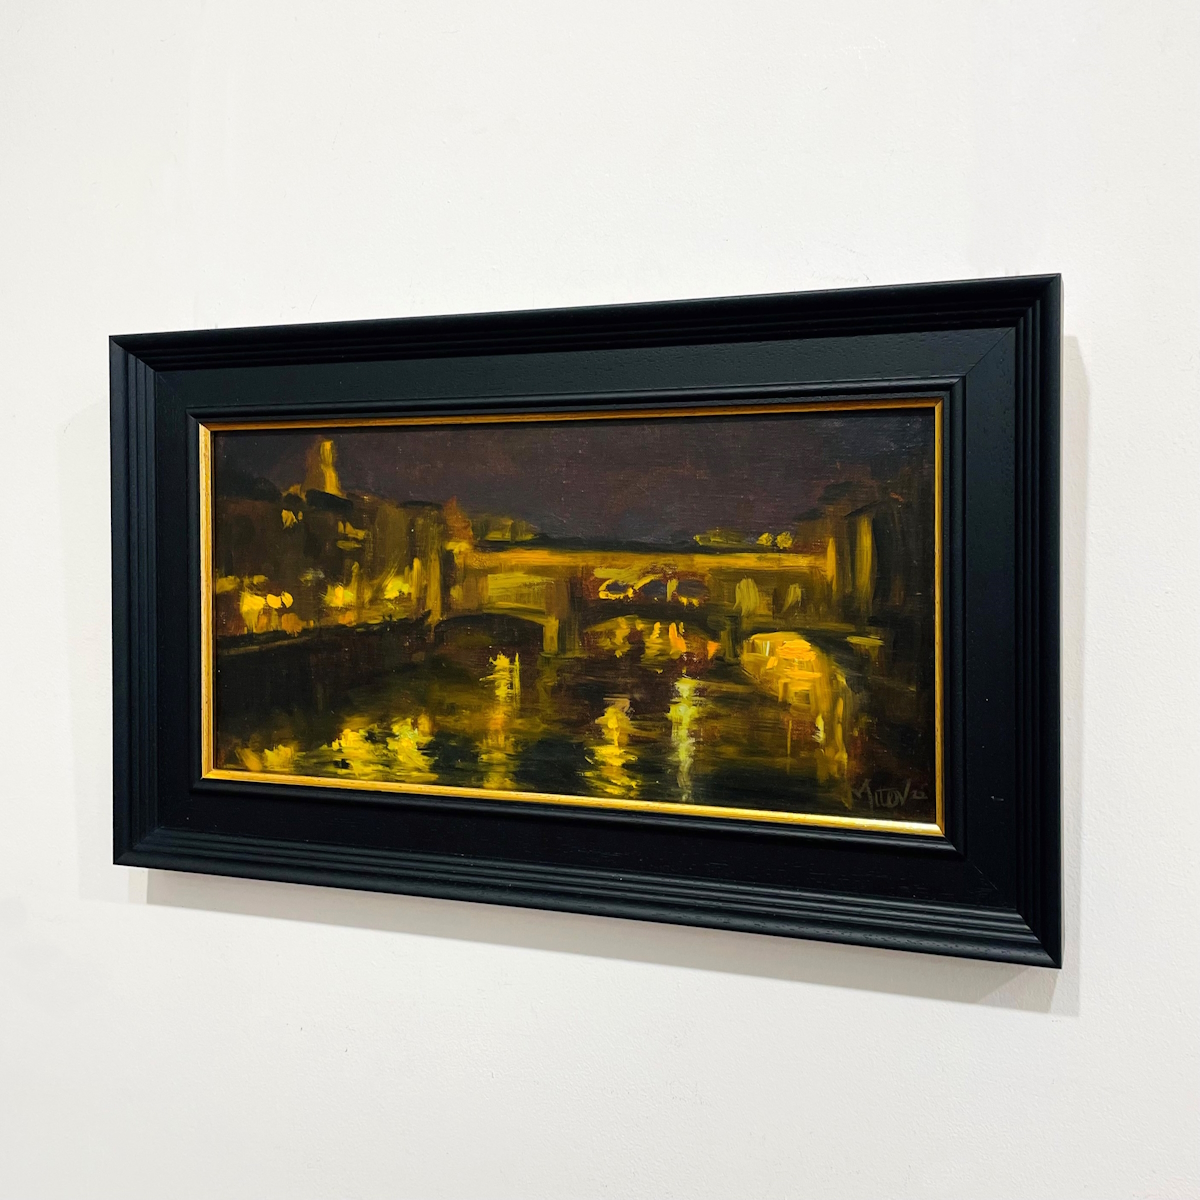 'Ponte Vecchio' by artist Angel Mitov